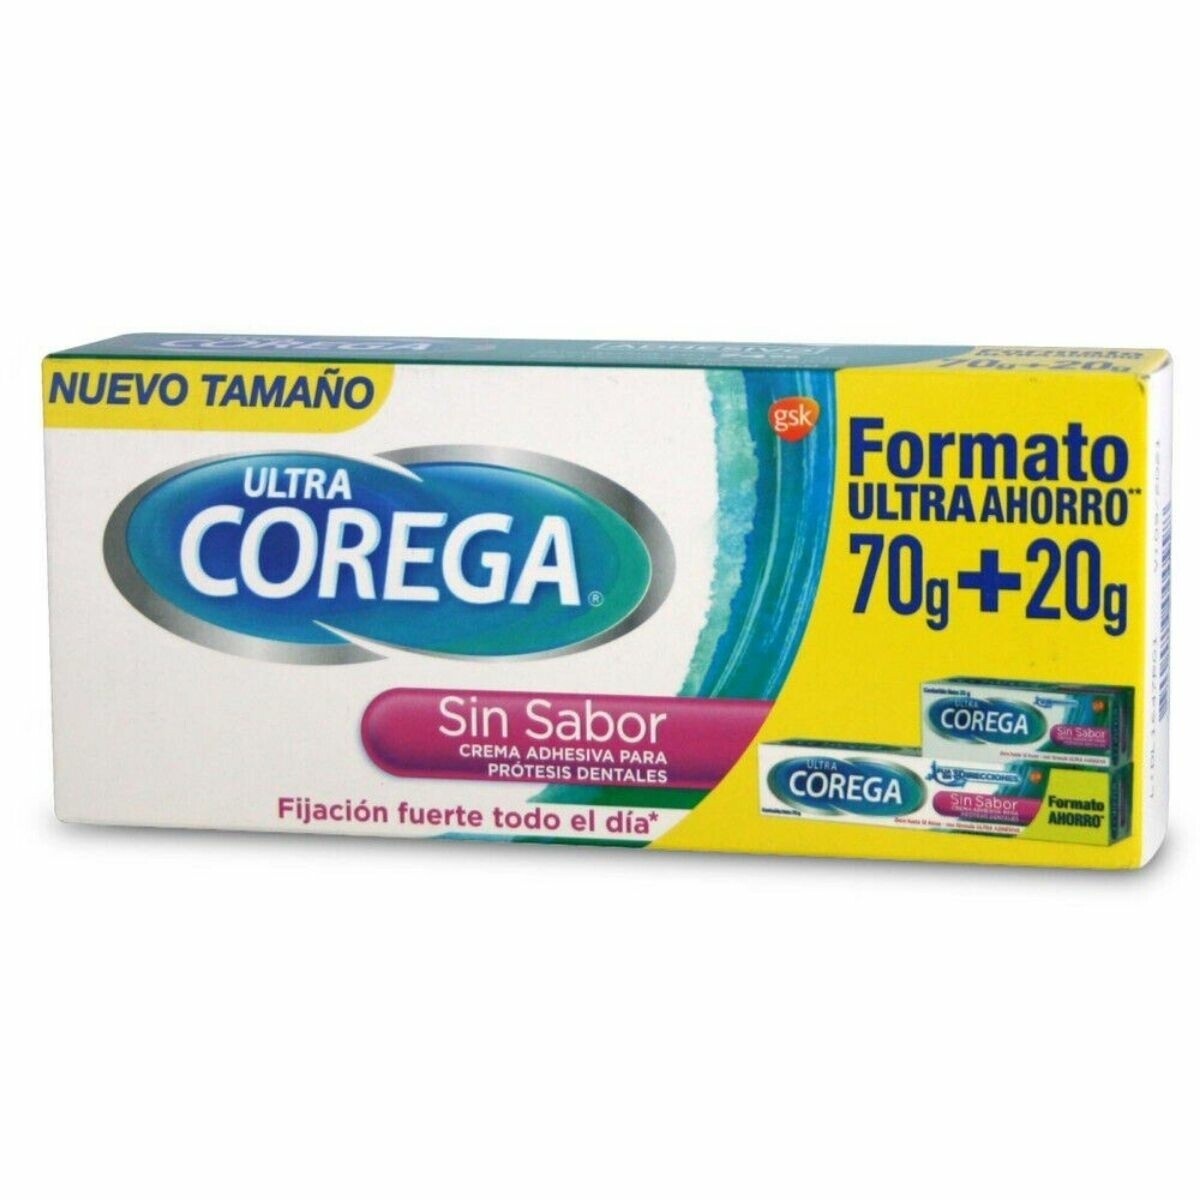 Corega Pack S/S 70gr + Corega 20gr 